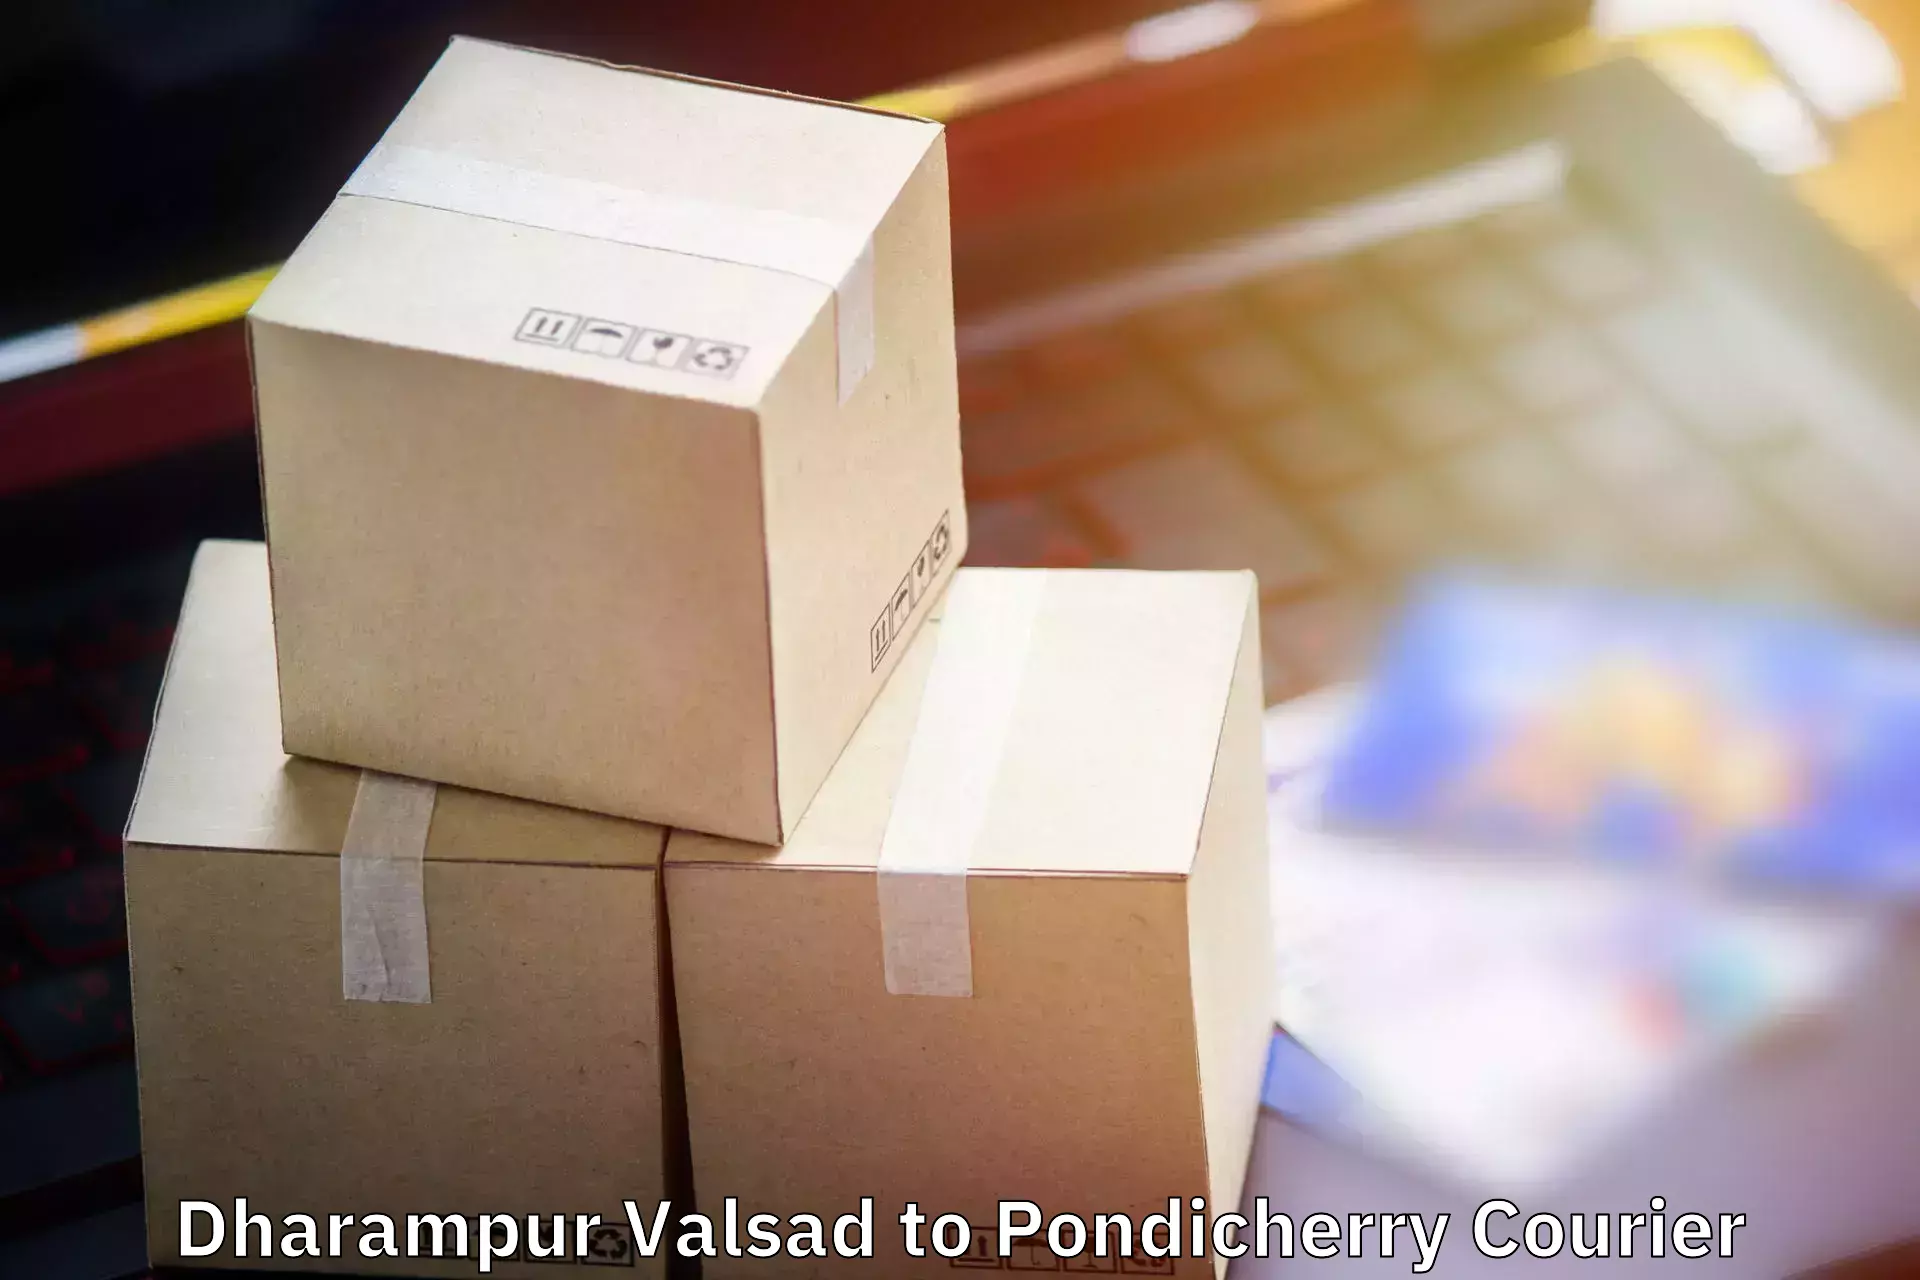 Luggage transfer service Dharampur Valsad to Pondicherry